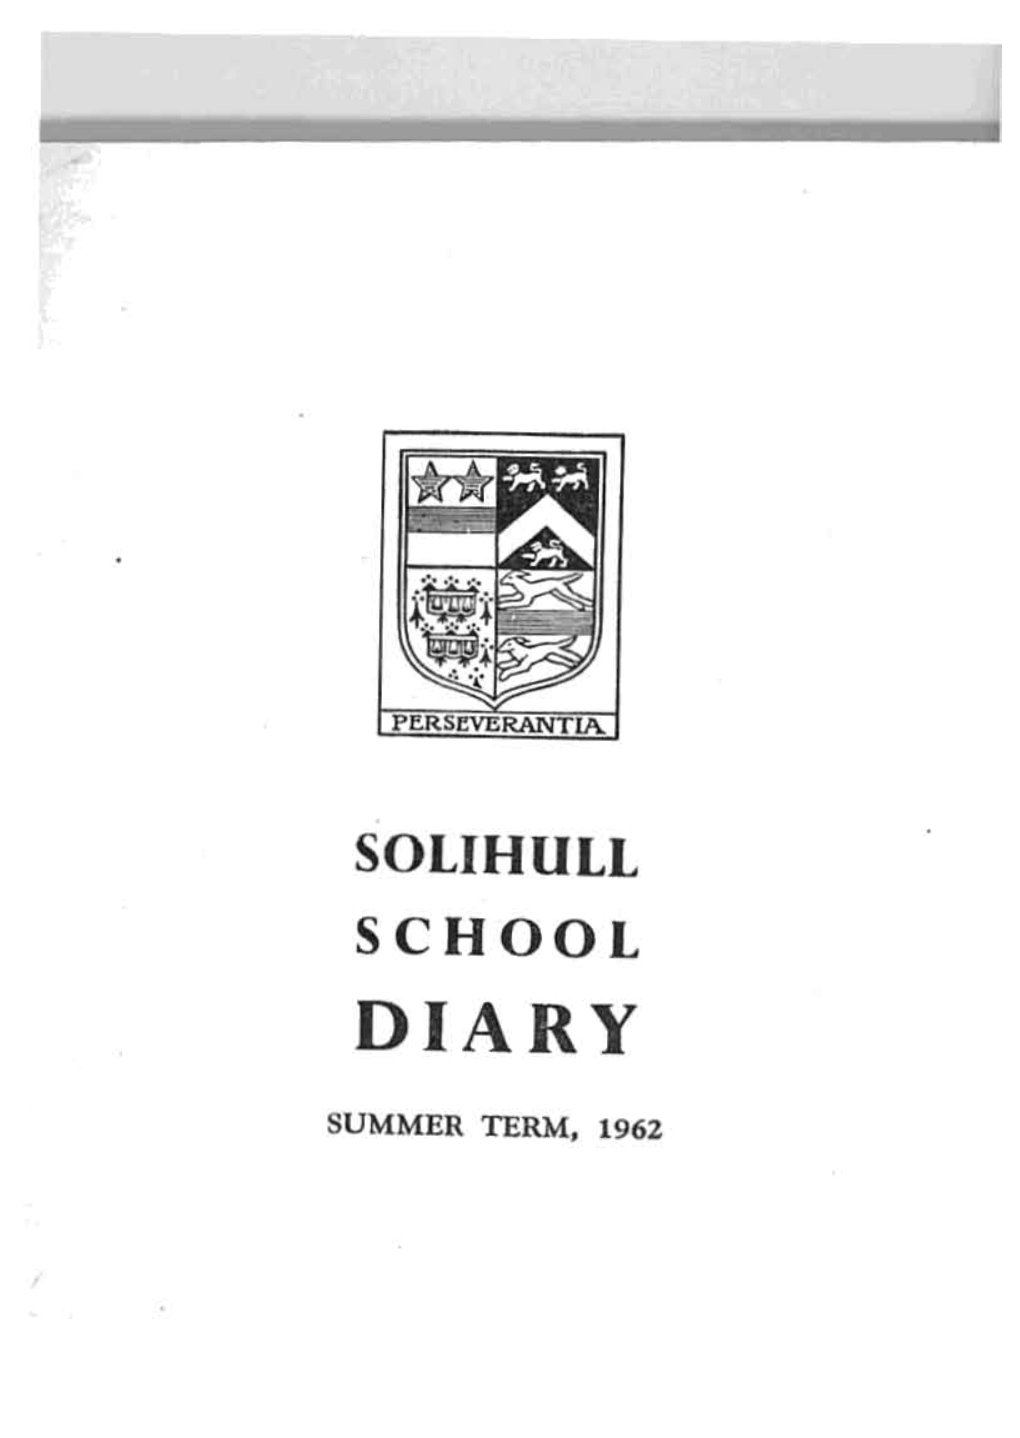 School Diary 1962 Summer Term